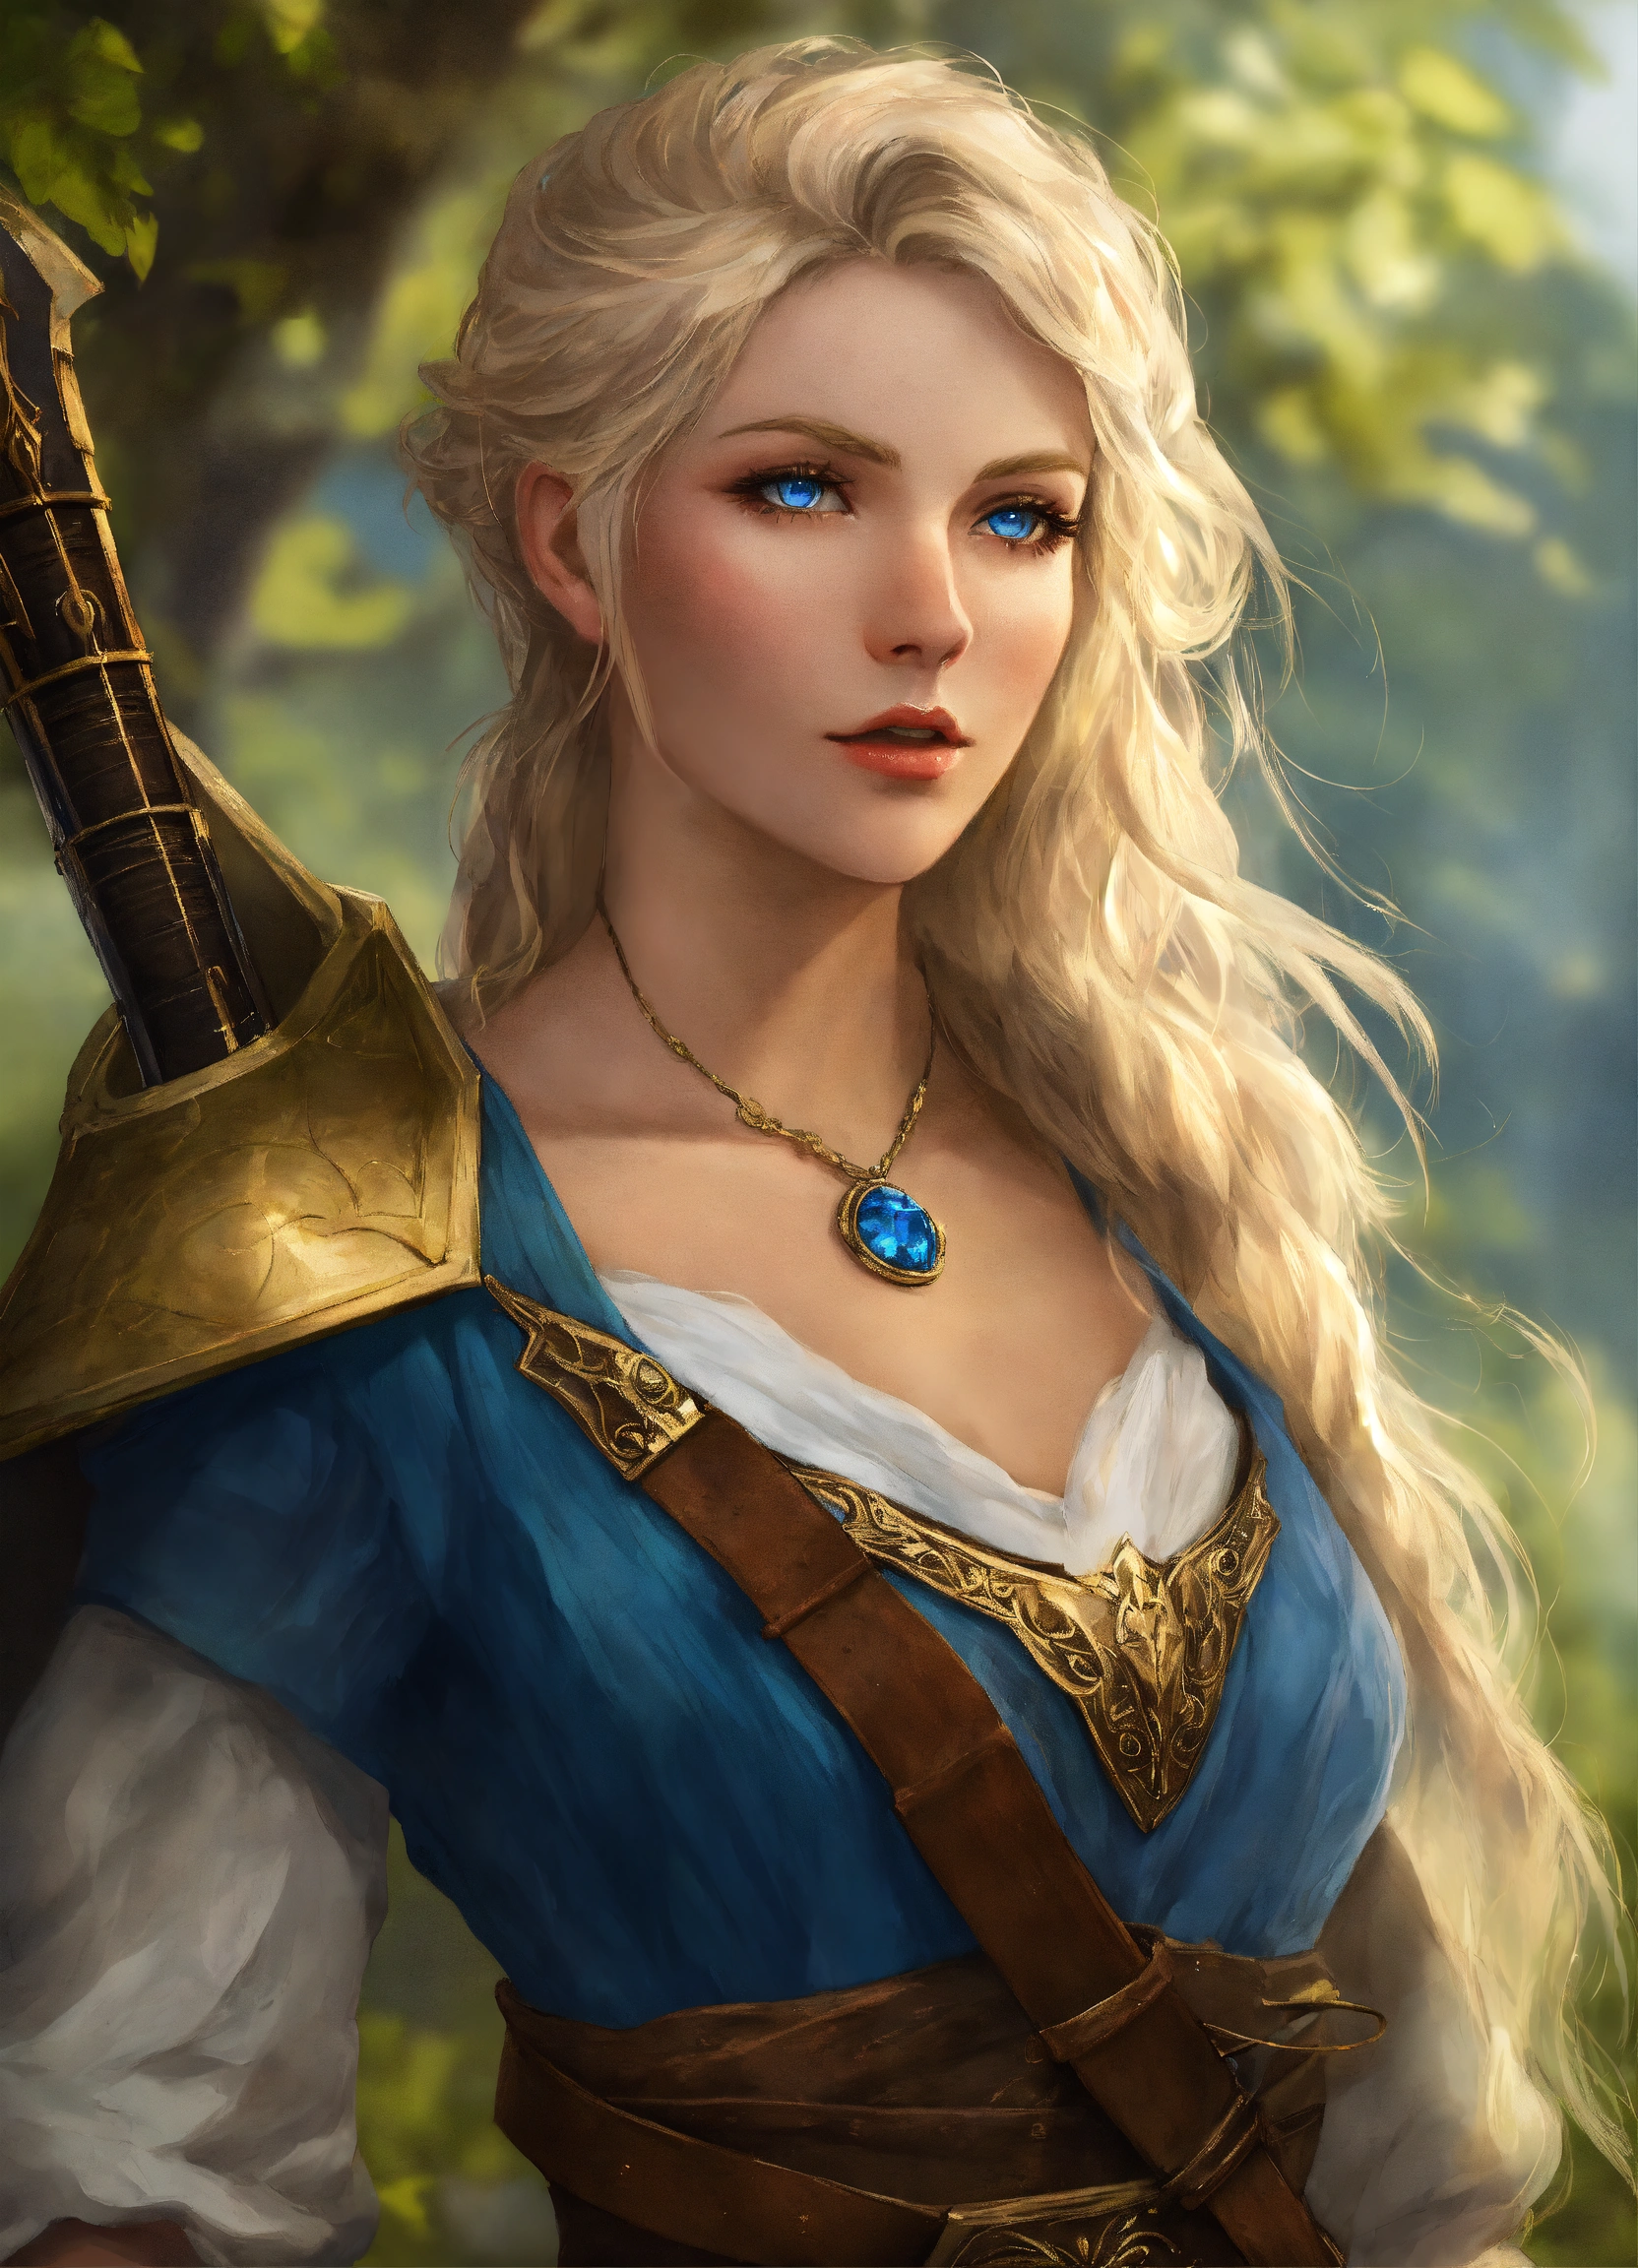 Lexica Heroic Fantasy Brythunian Woman Twenty Years Old Blond Hair Blue Eyes Shes A Bard 